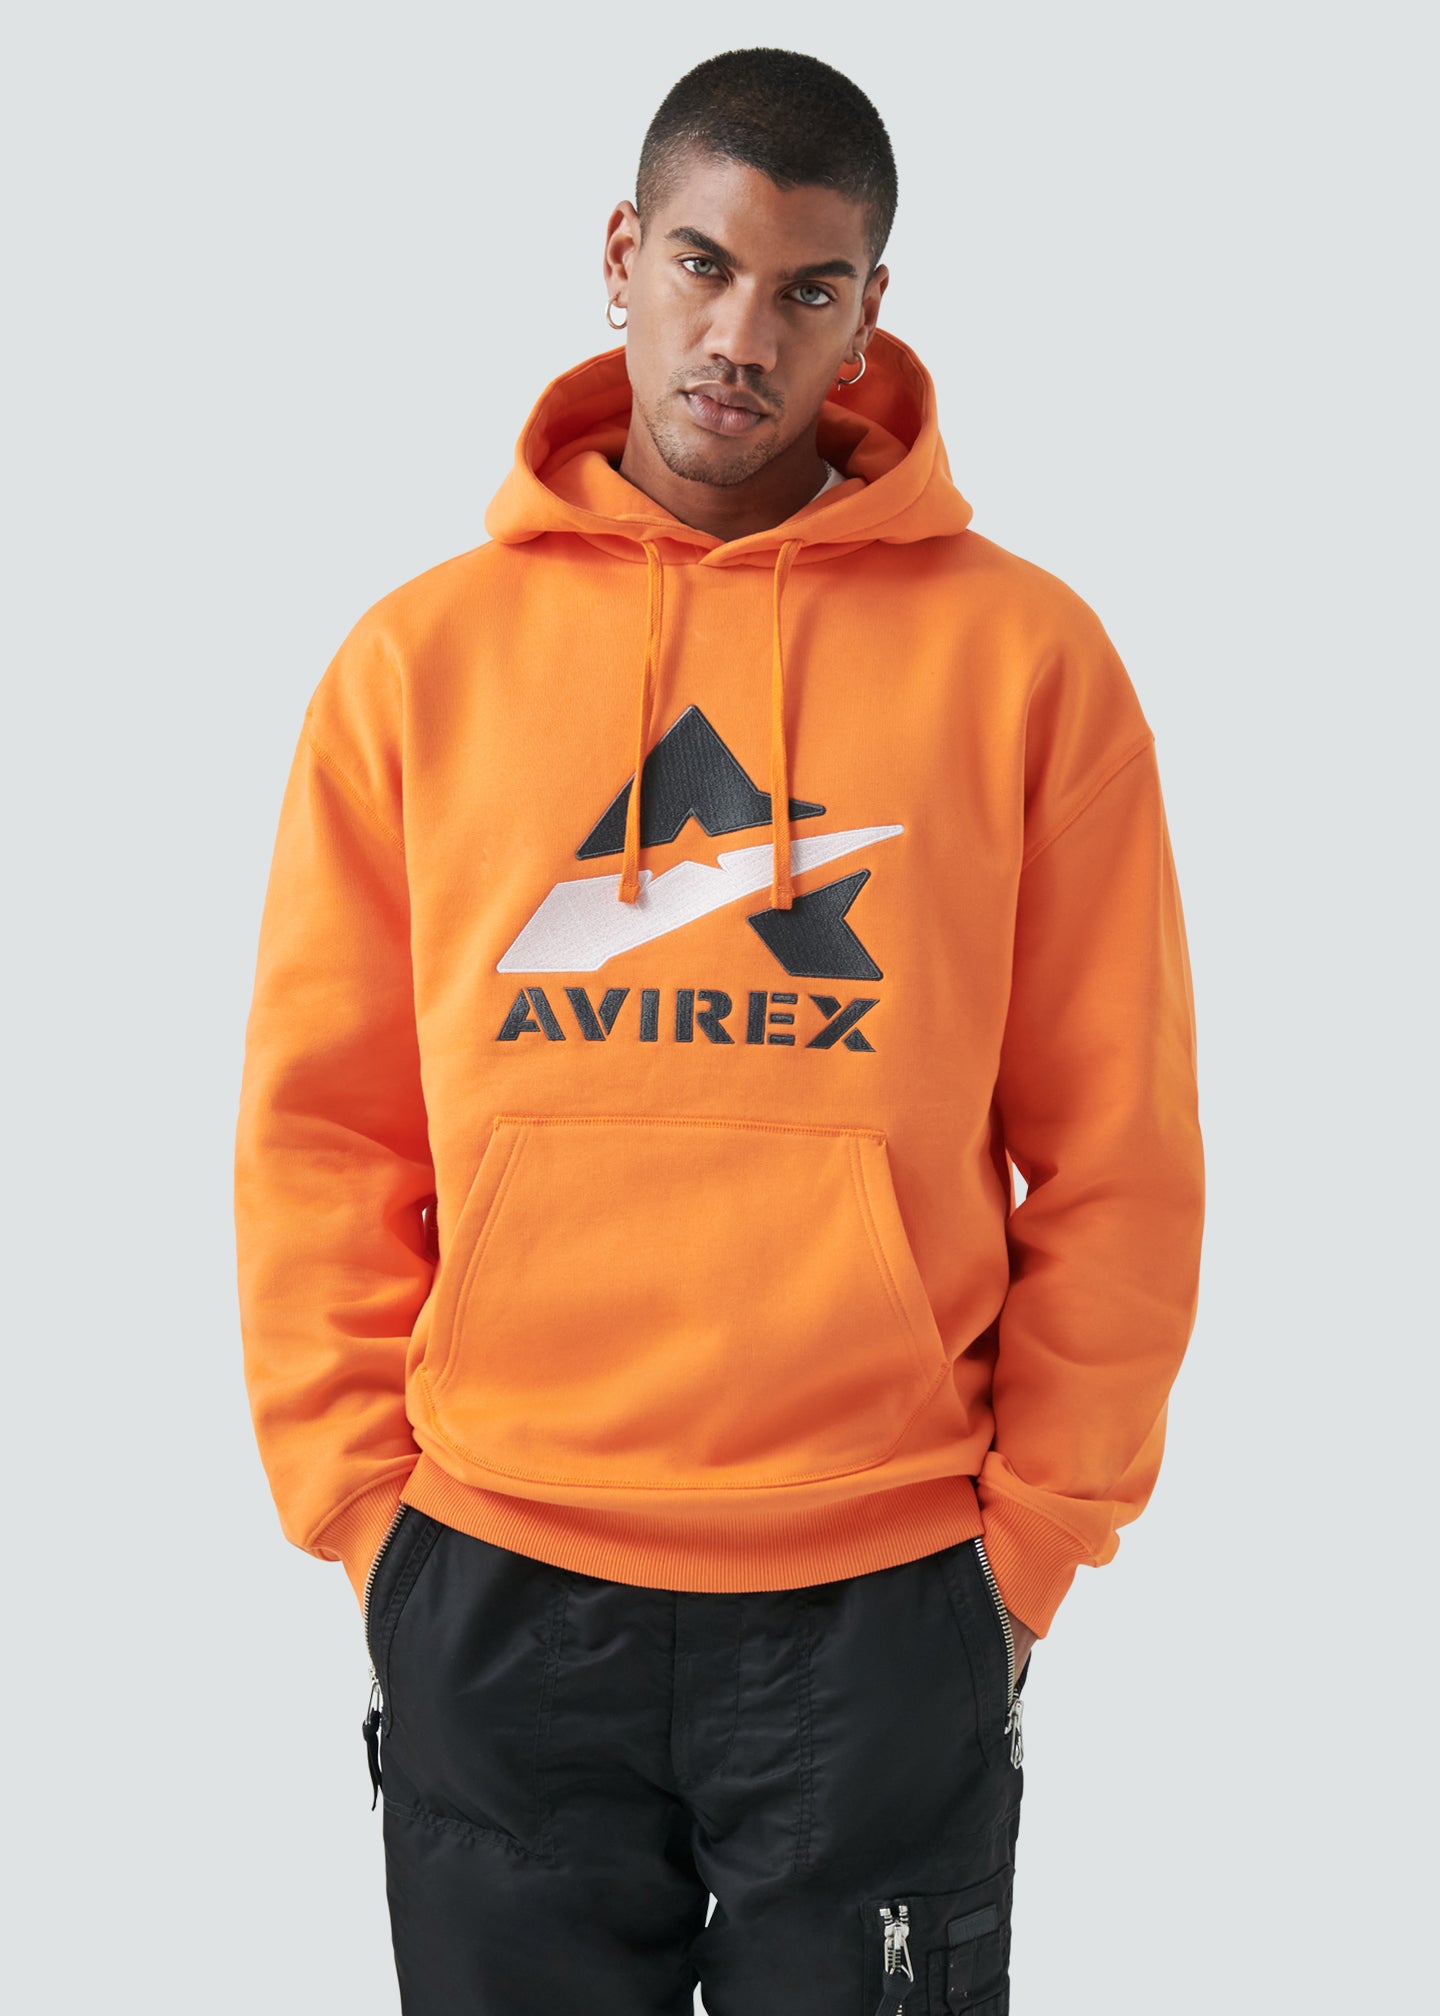 Avirex The Barksdale Hoody - Orange - Front